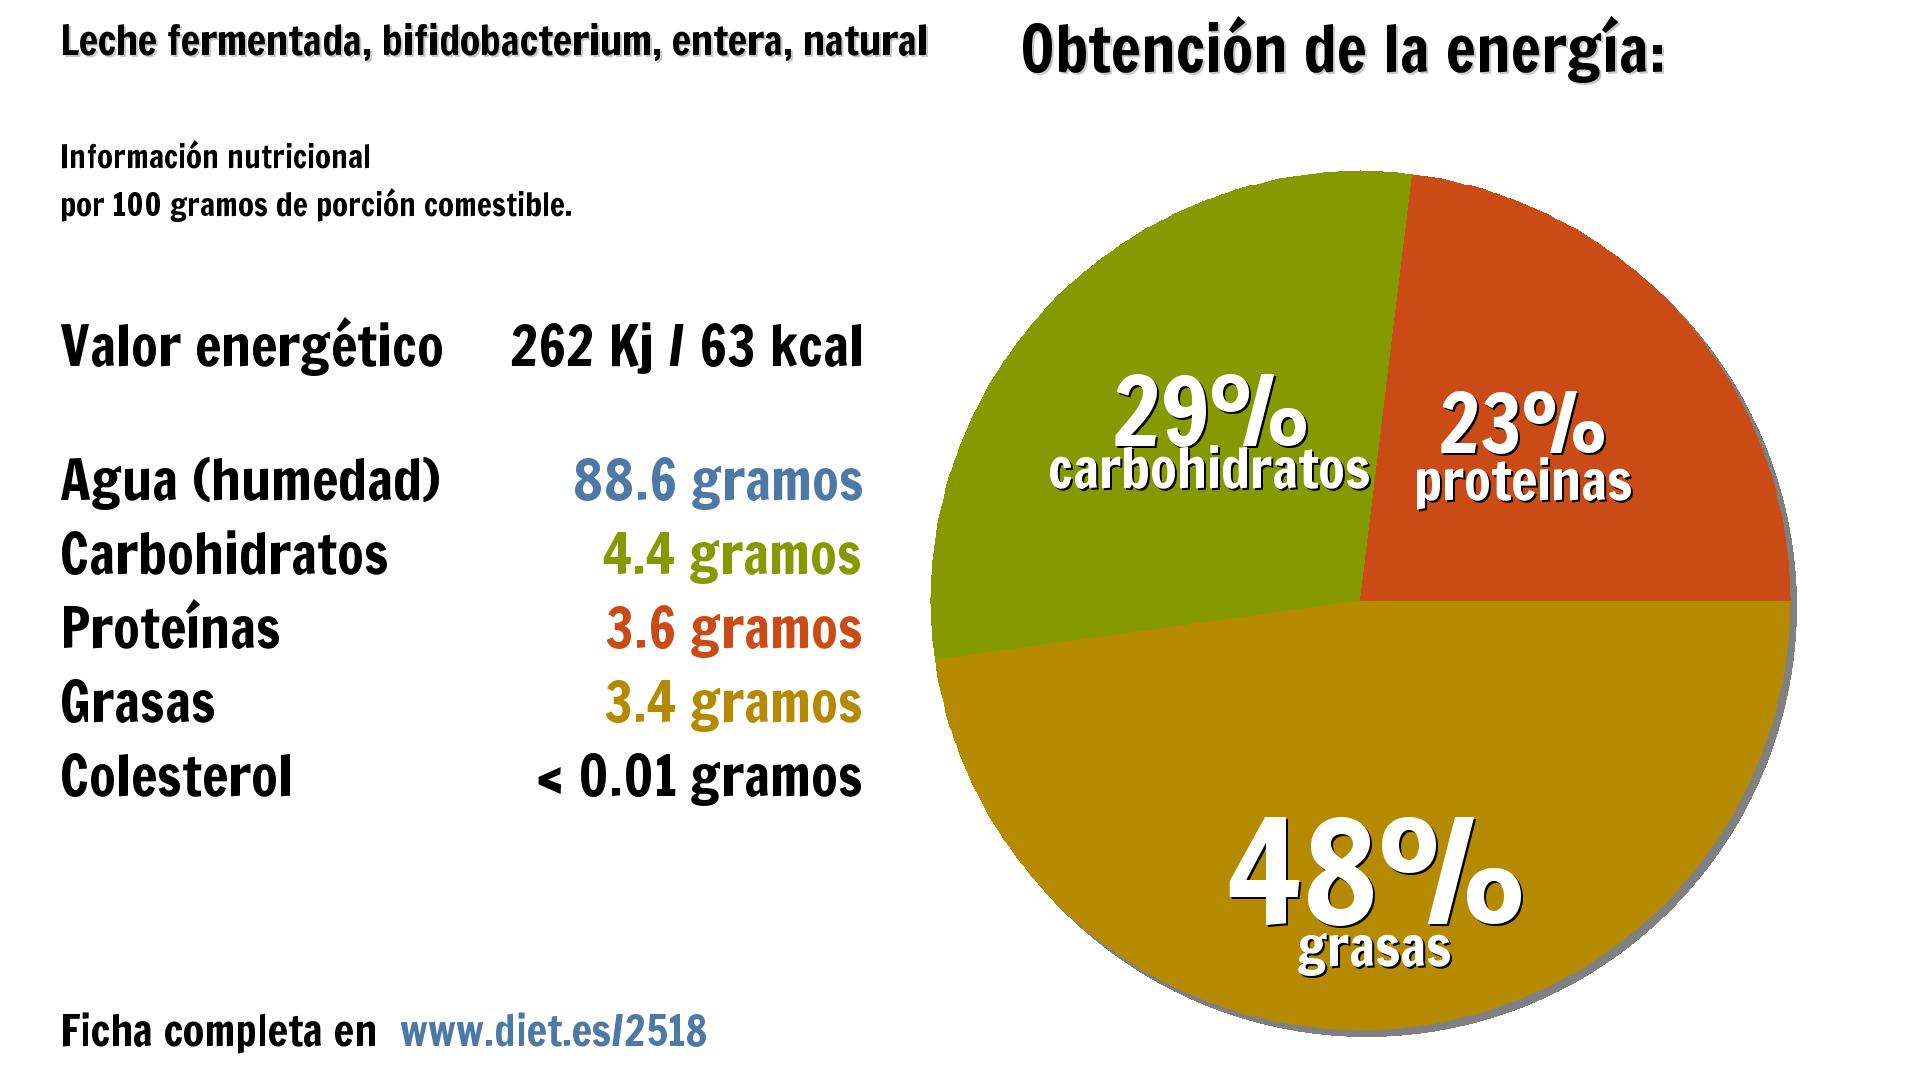 Leche fermentada, bifidobacterium, entera, natural: energía 262 Kj, agua 89 g., carbohidratos 4 g., proteínas 4 g. y grasas 3 g.